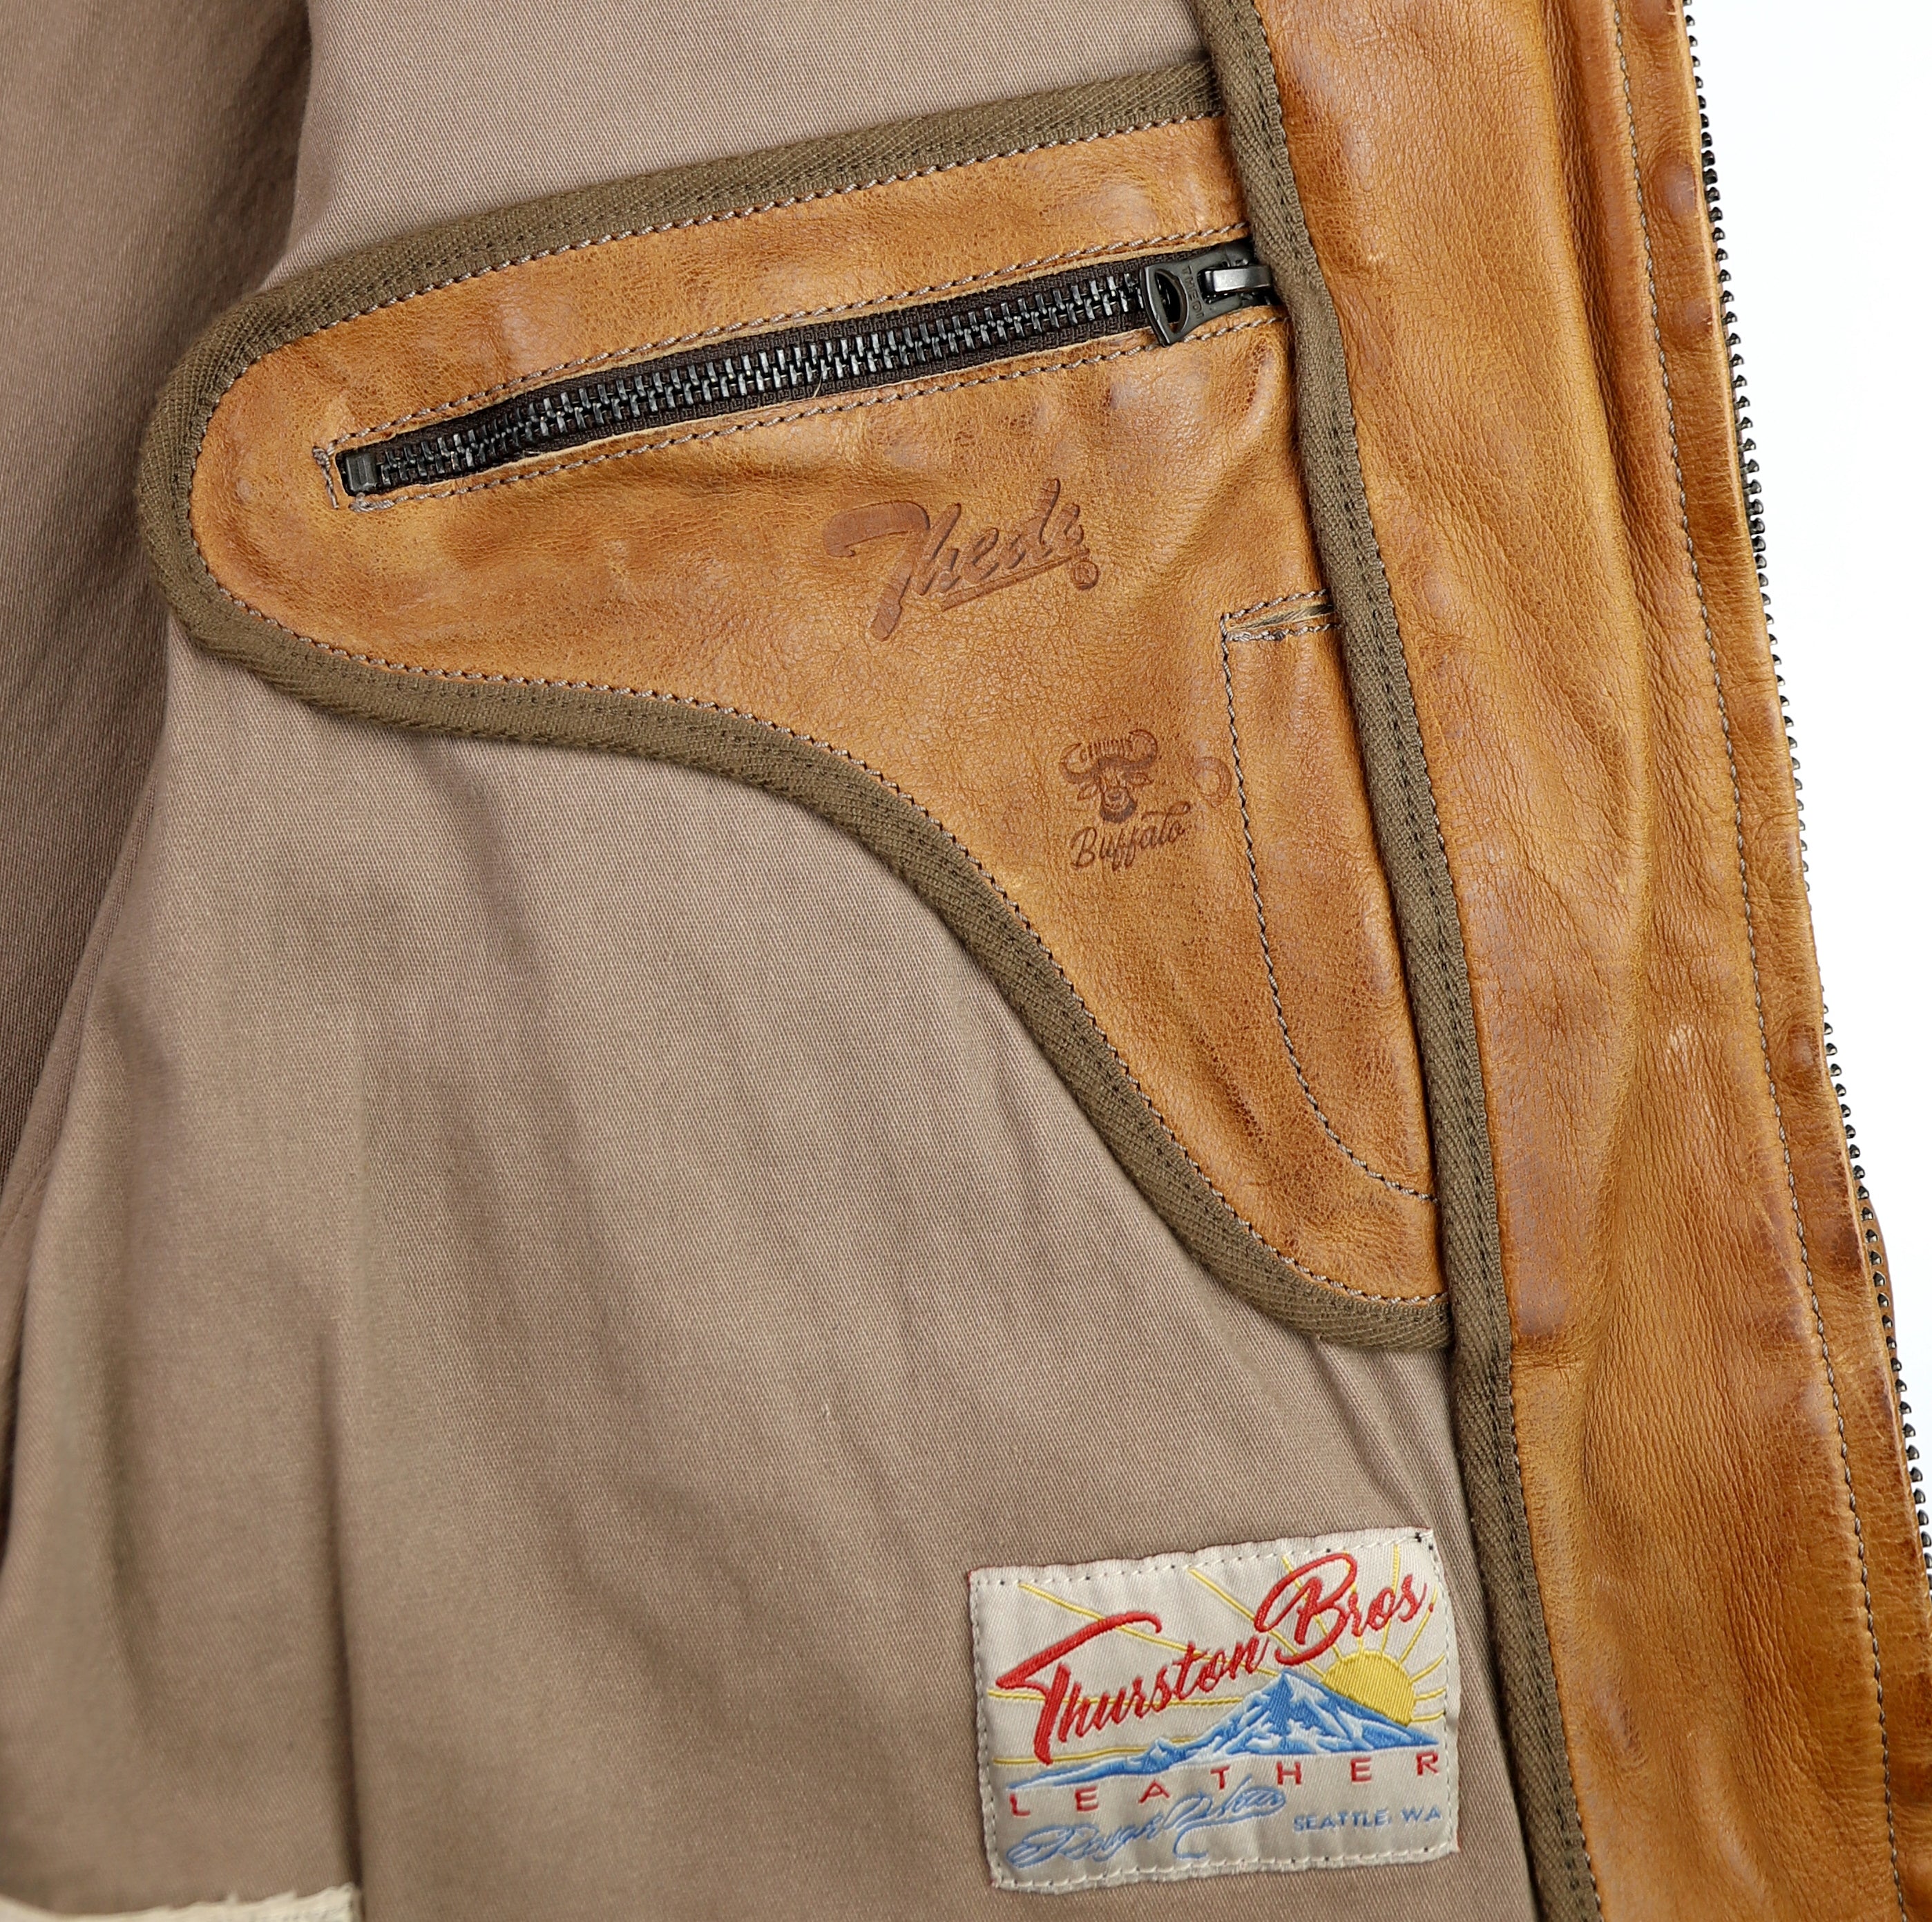 Thedi Zip-Up Markos Jacket, size XXL, Cuoio Buffalo